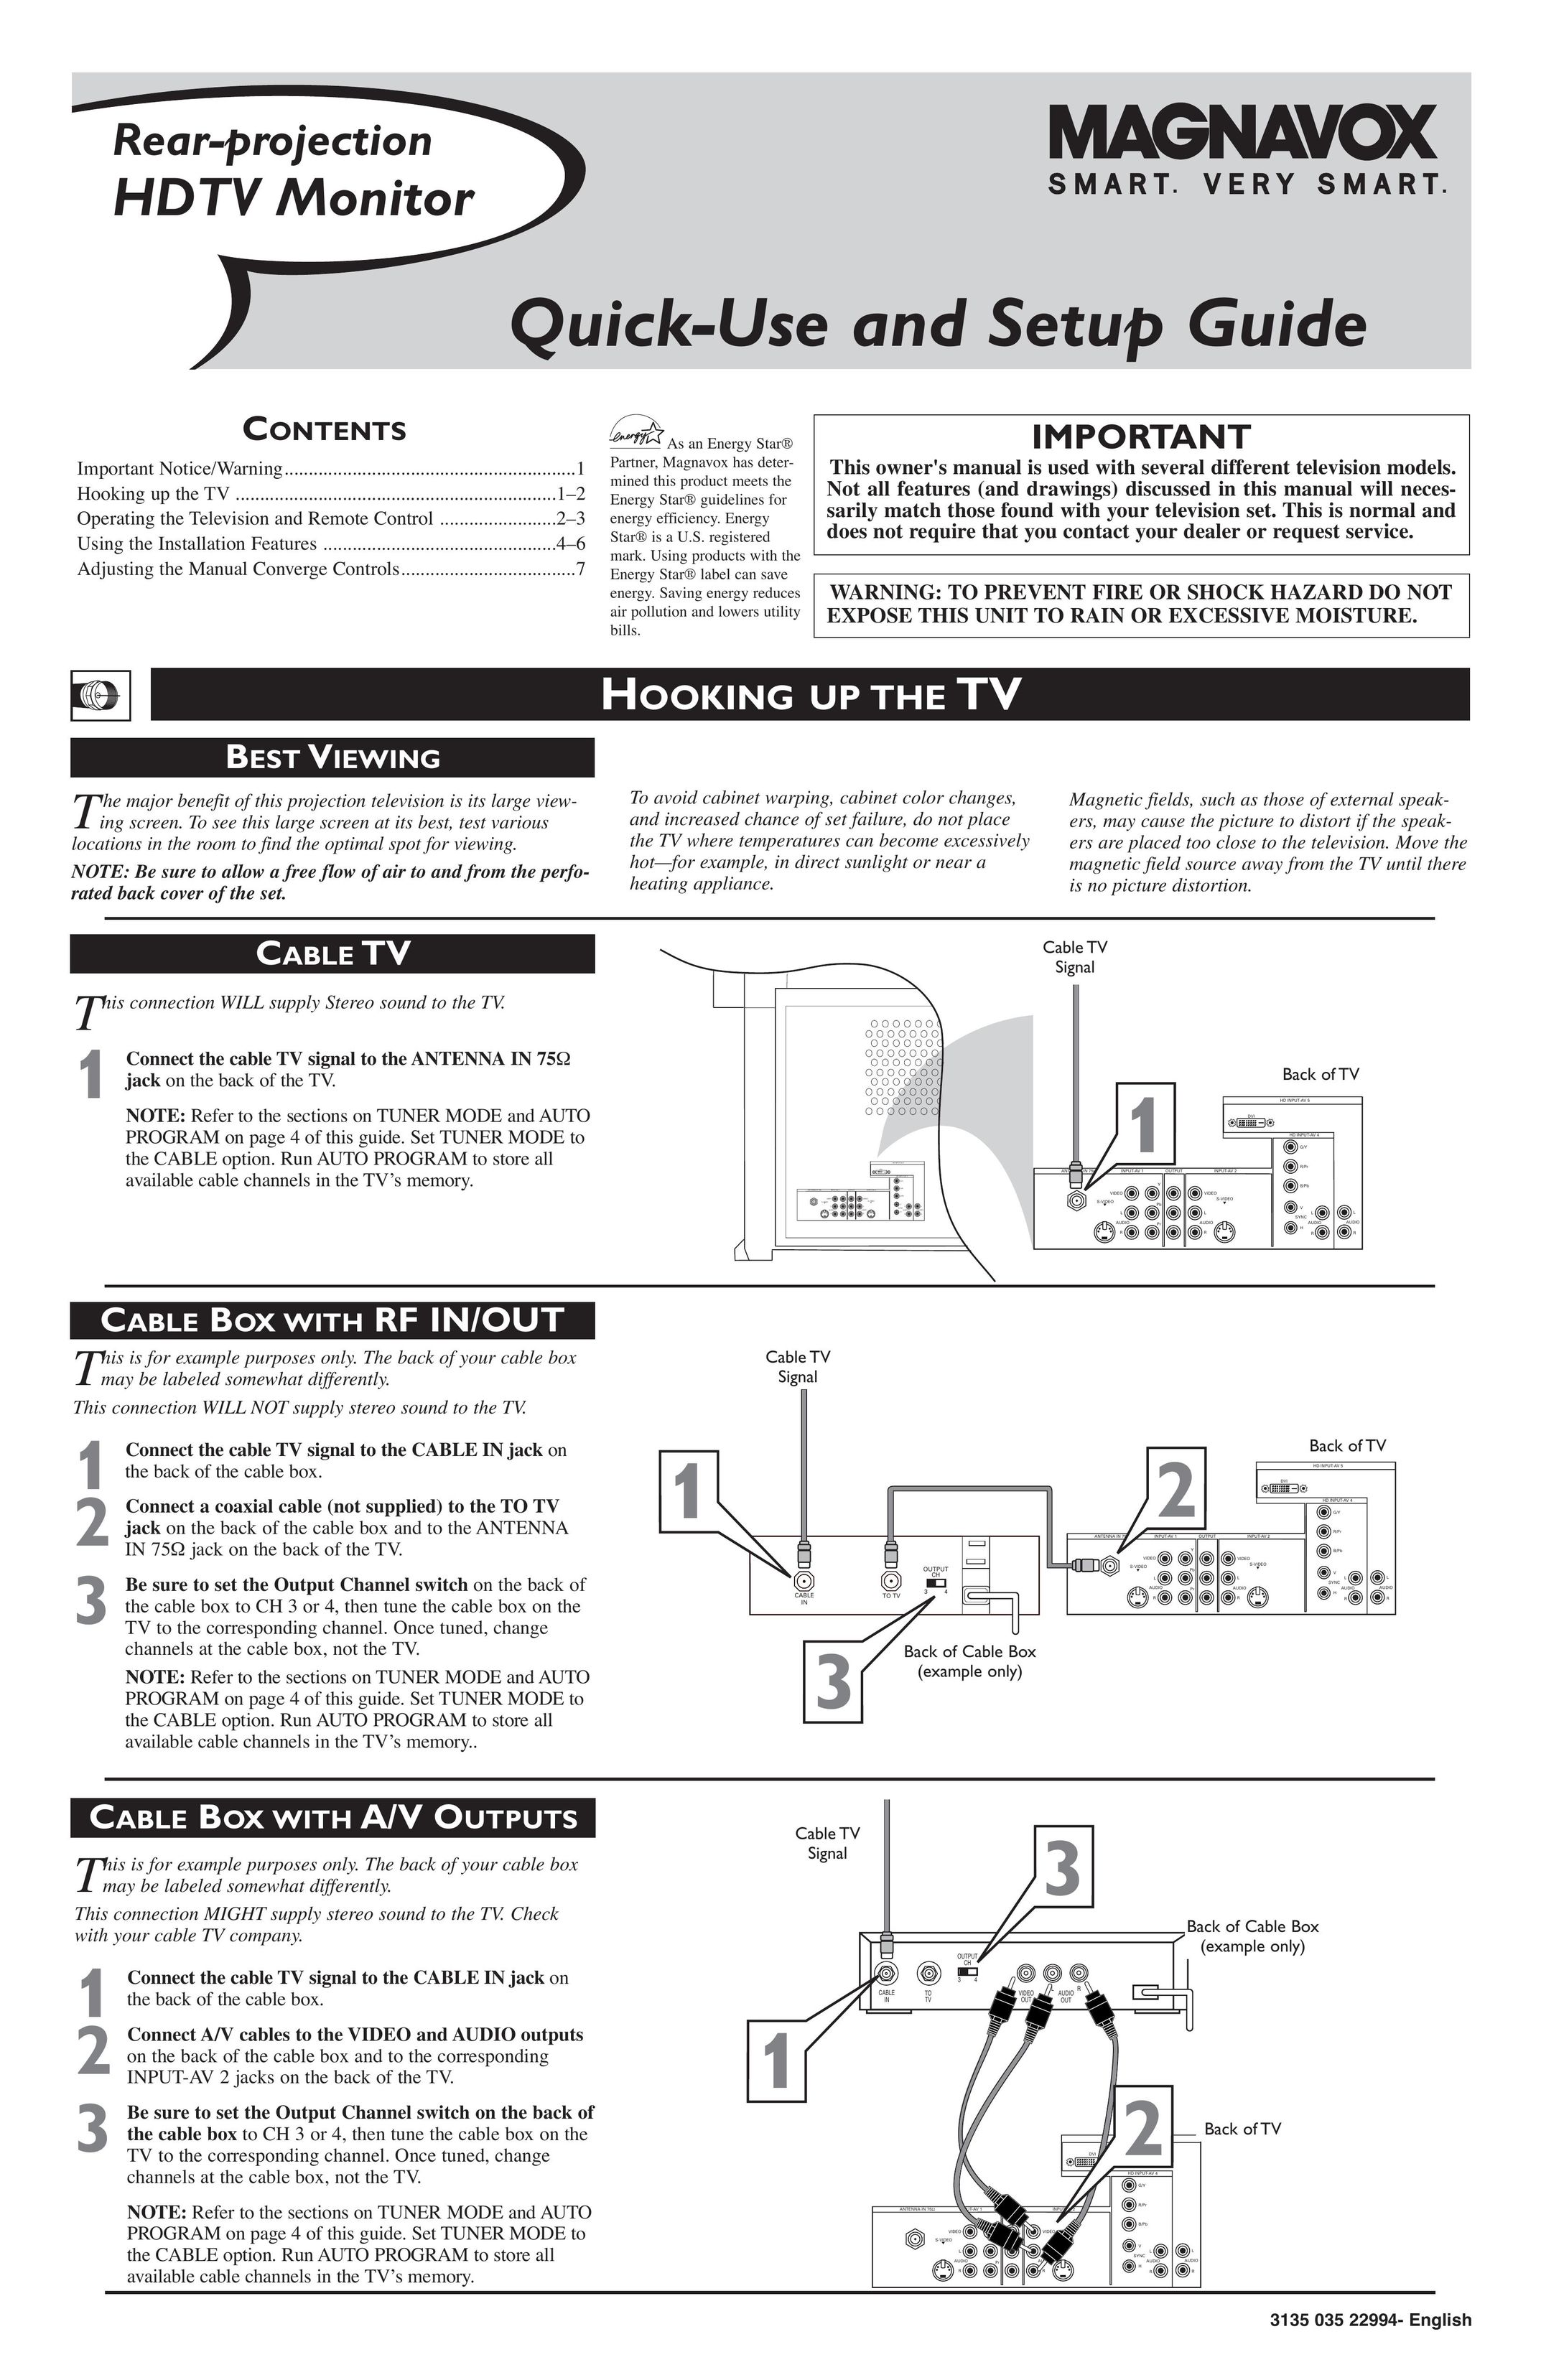 Magnavox Rear-projection HDTV Monitor Computer Monitor User Manual